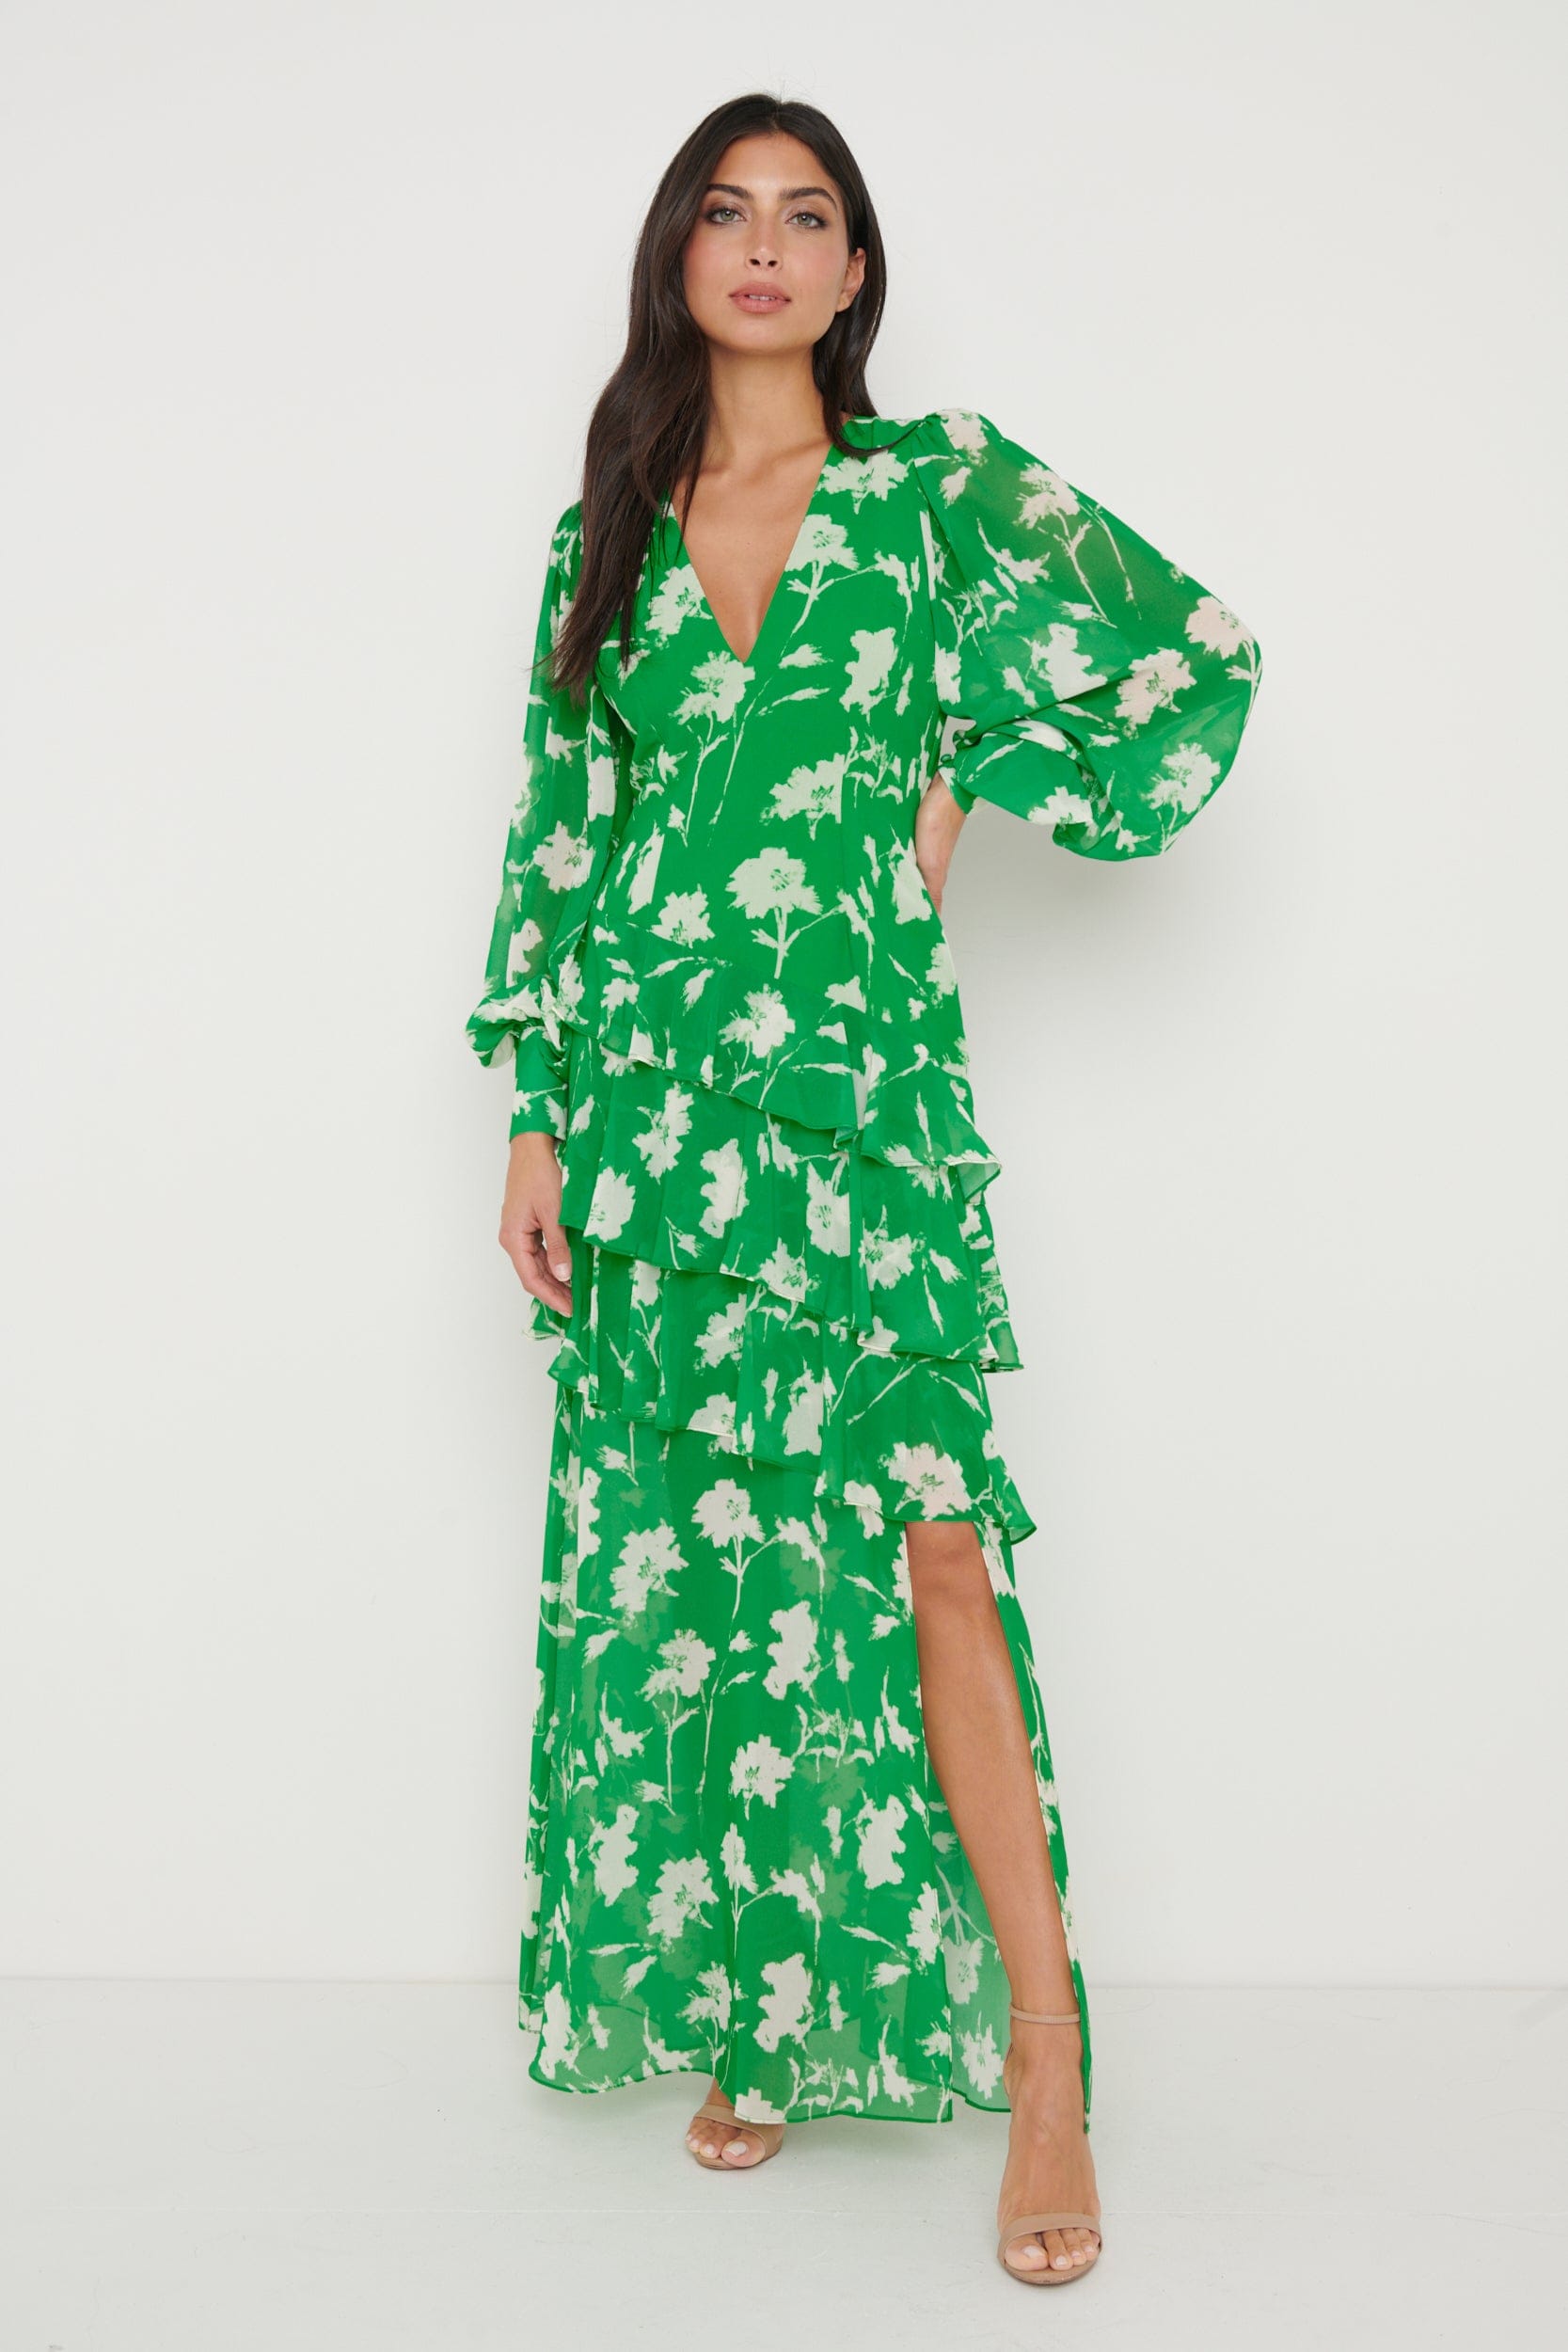 Sabrinna Backless Ruffle Dress - Green Floral, 26